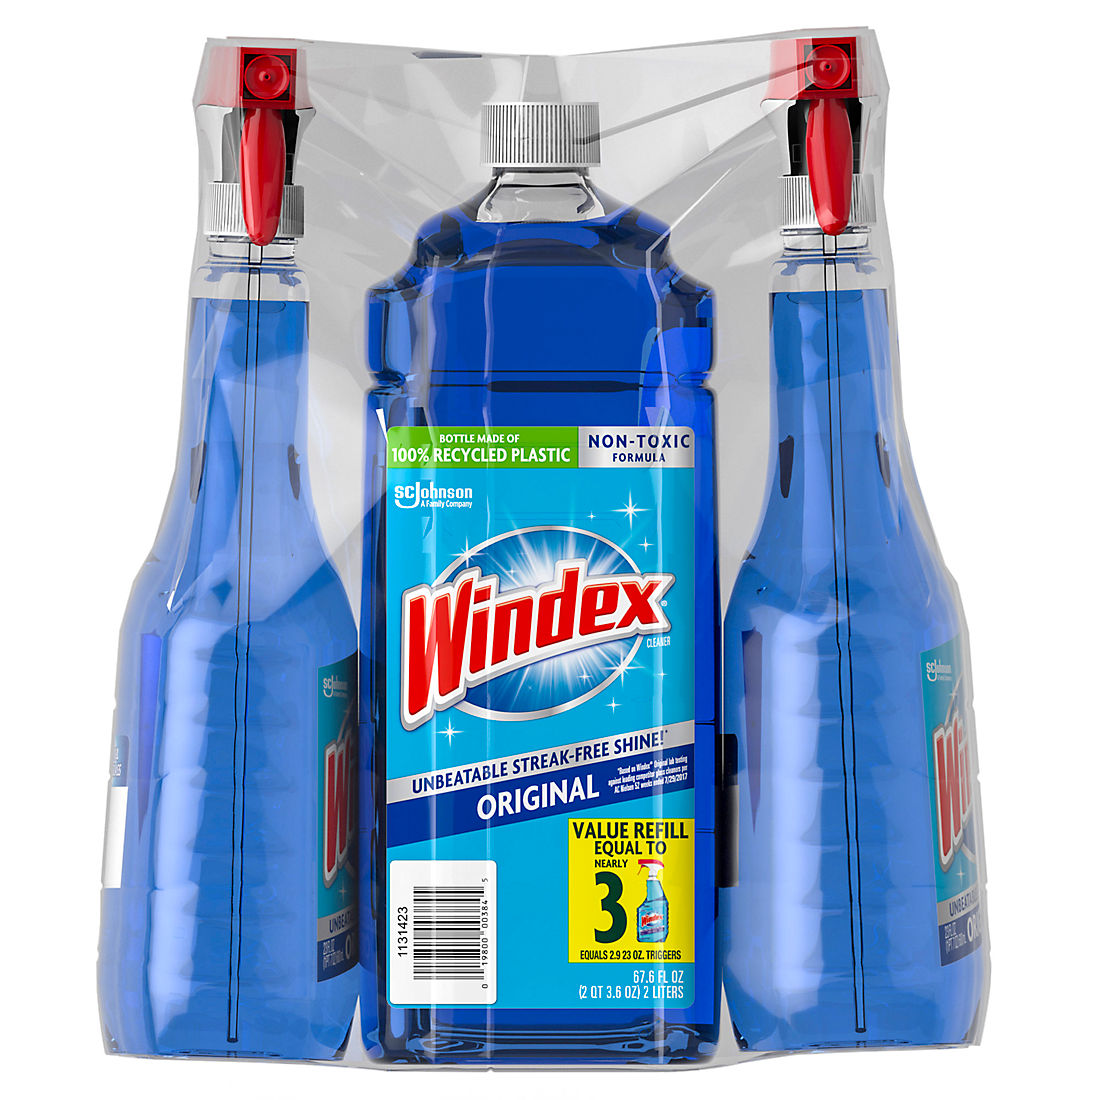 Windex Original Glass Cleaner, 2 ct.